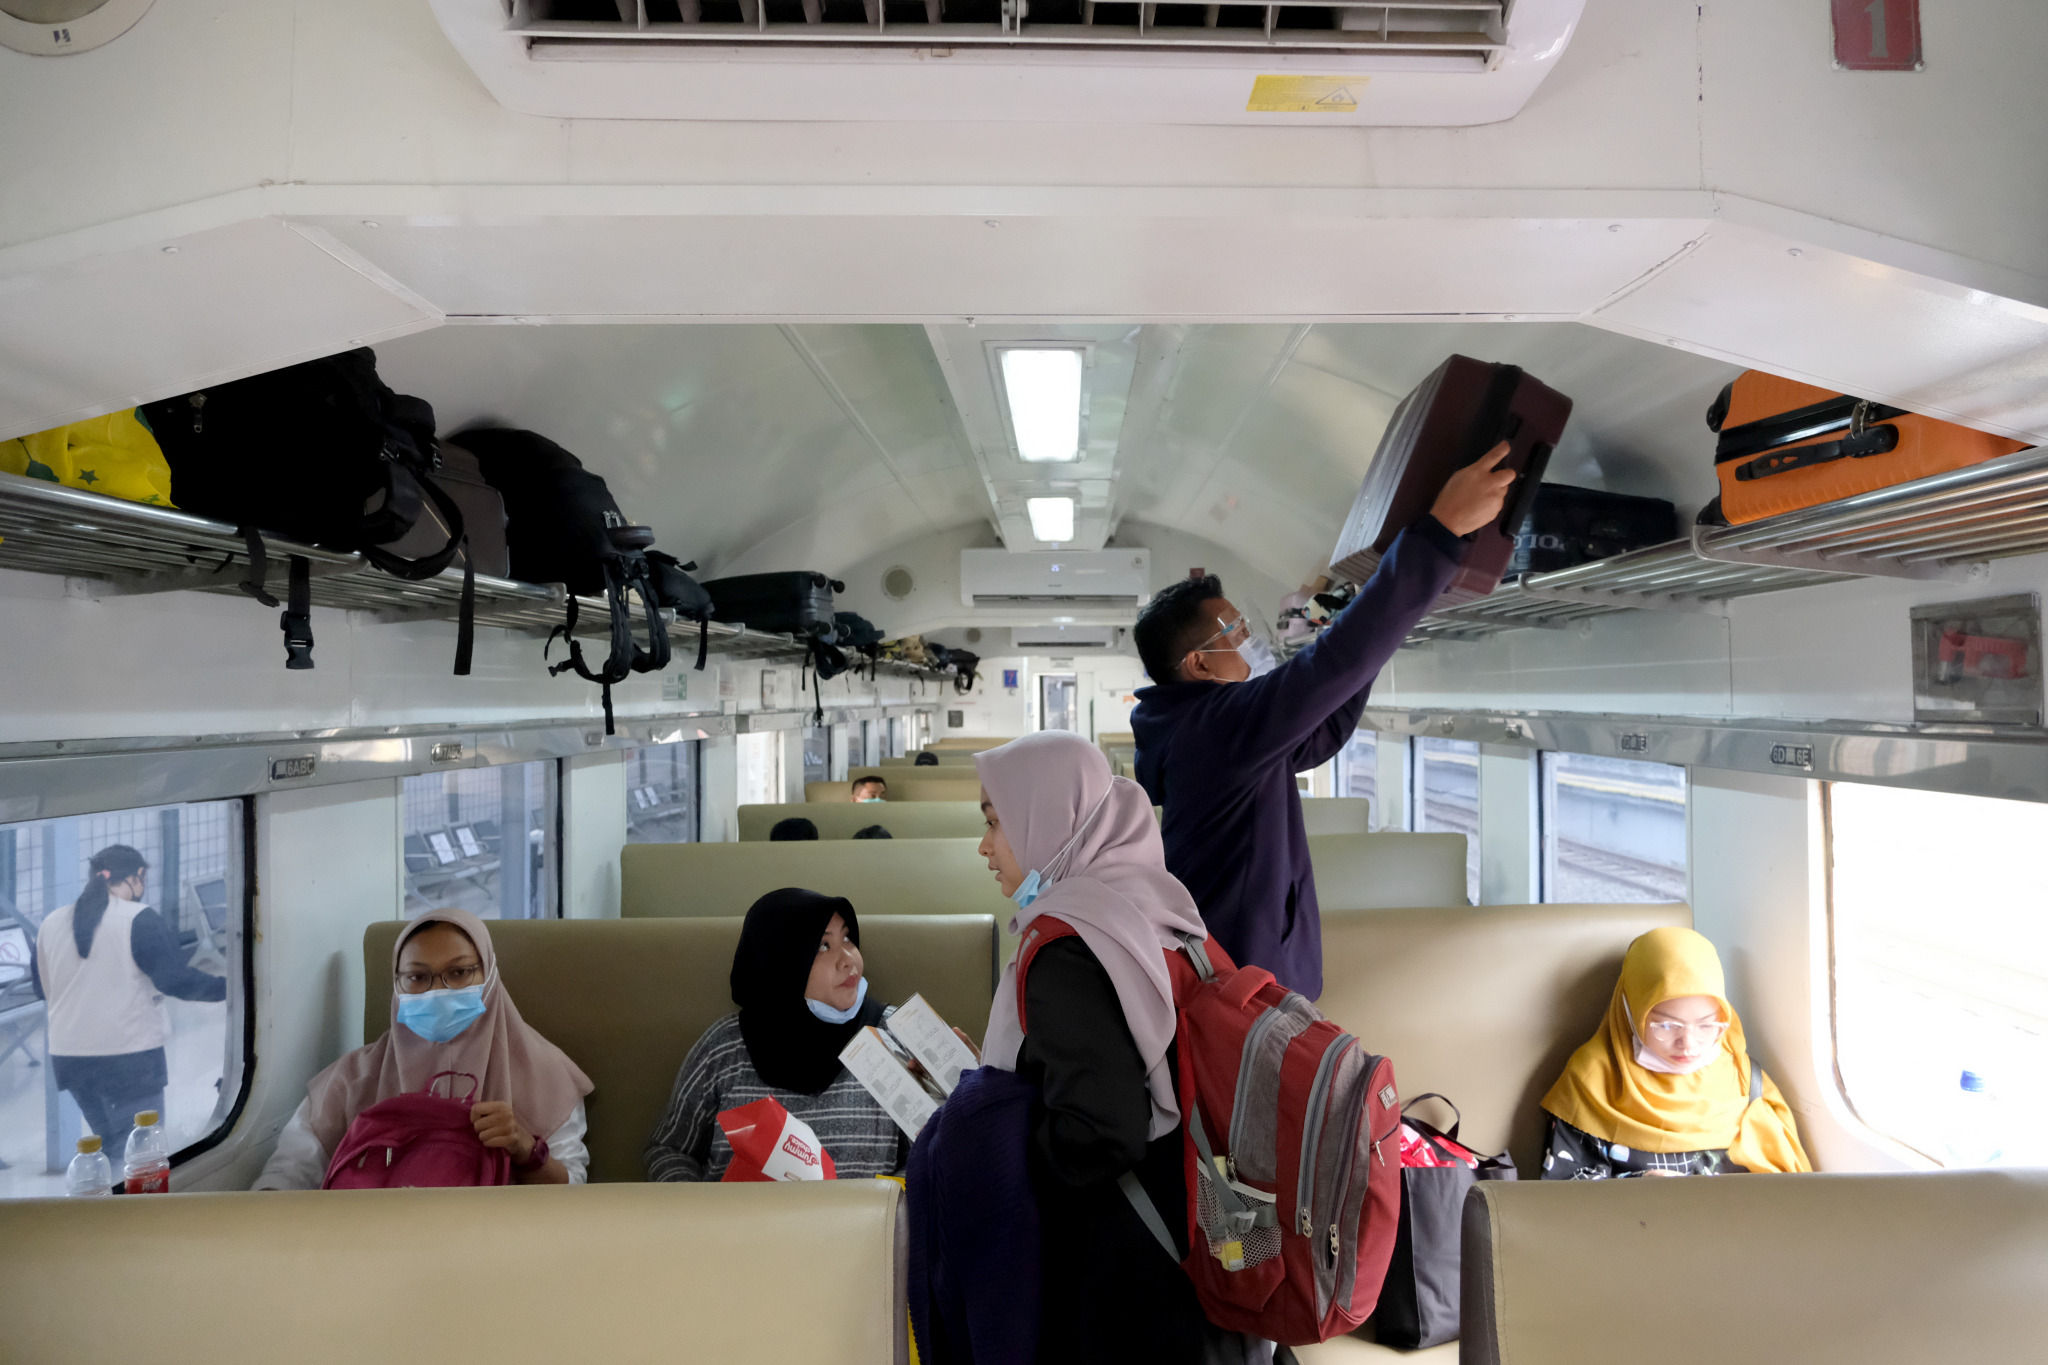 <p>Penumpang berada dirangkaian kereta api Matarmaja relasi Jakarta-Malang yang diberangkatkan dari stasiun Pasar Senen, Jakarta, Selasa, 27 Oktober 2020. Foto: Ismail Pohan/TrenAsia</p>
